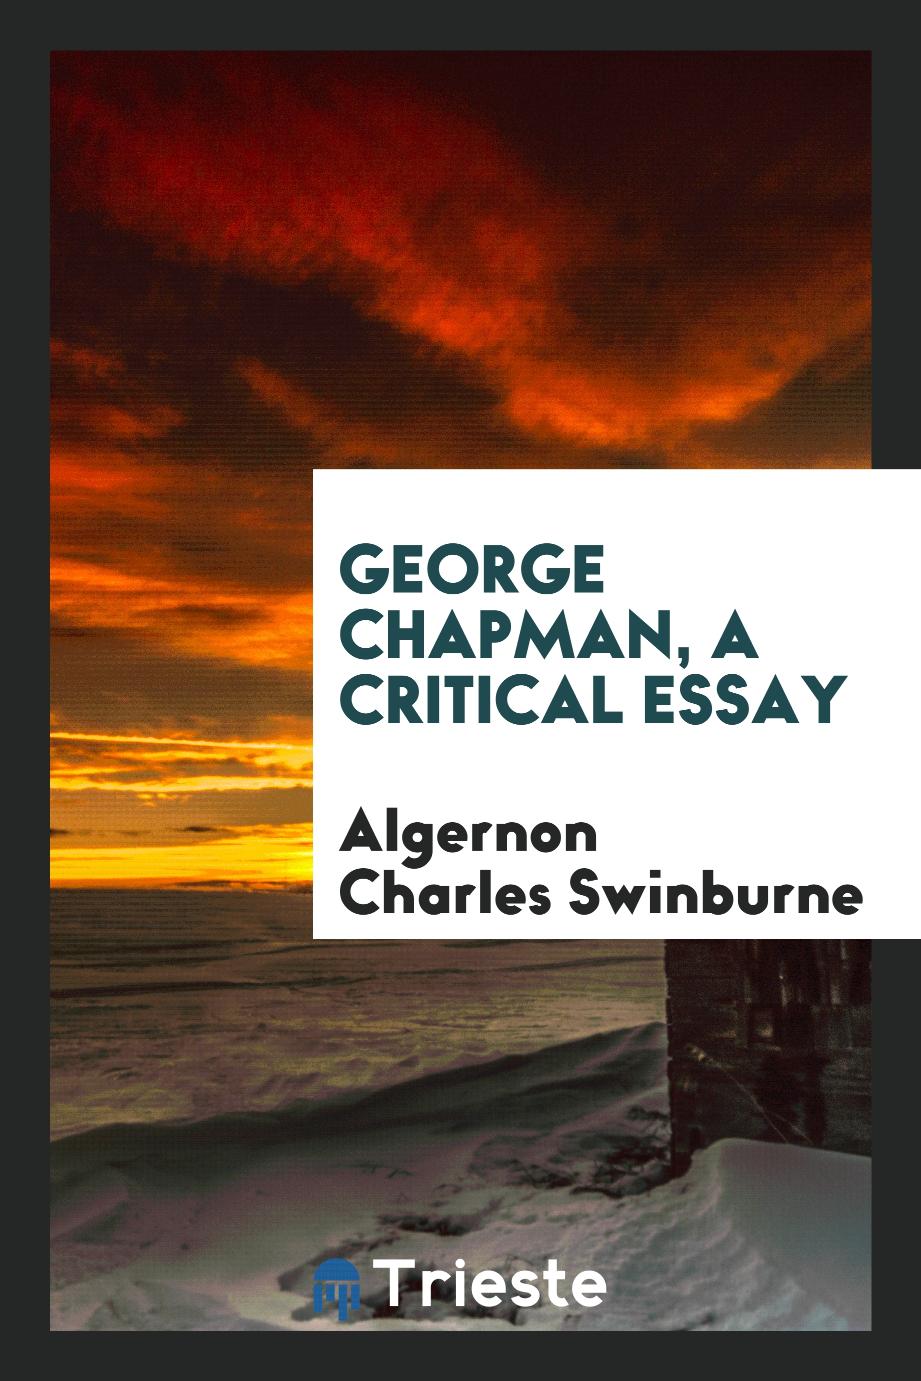 George Chapman, a critical essay